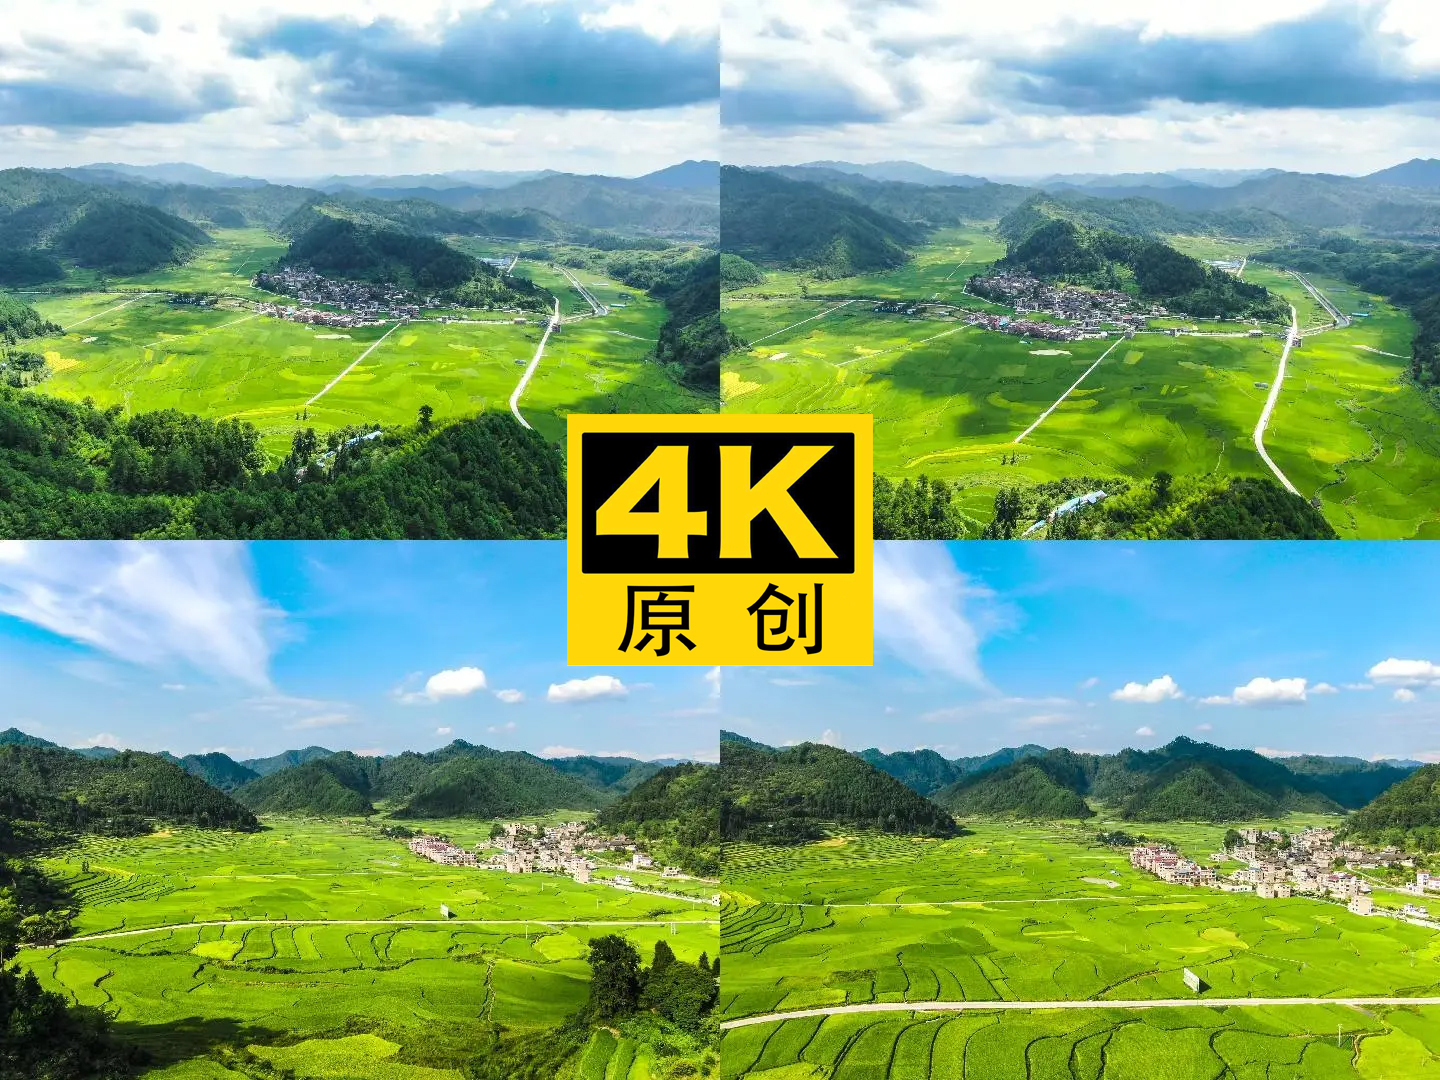 4K 航拍延时农村水稻稻田风光